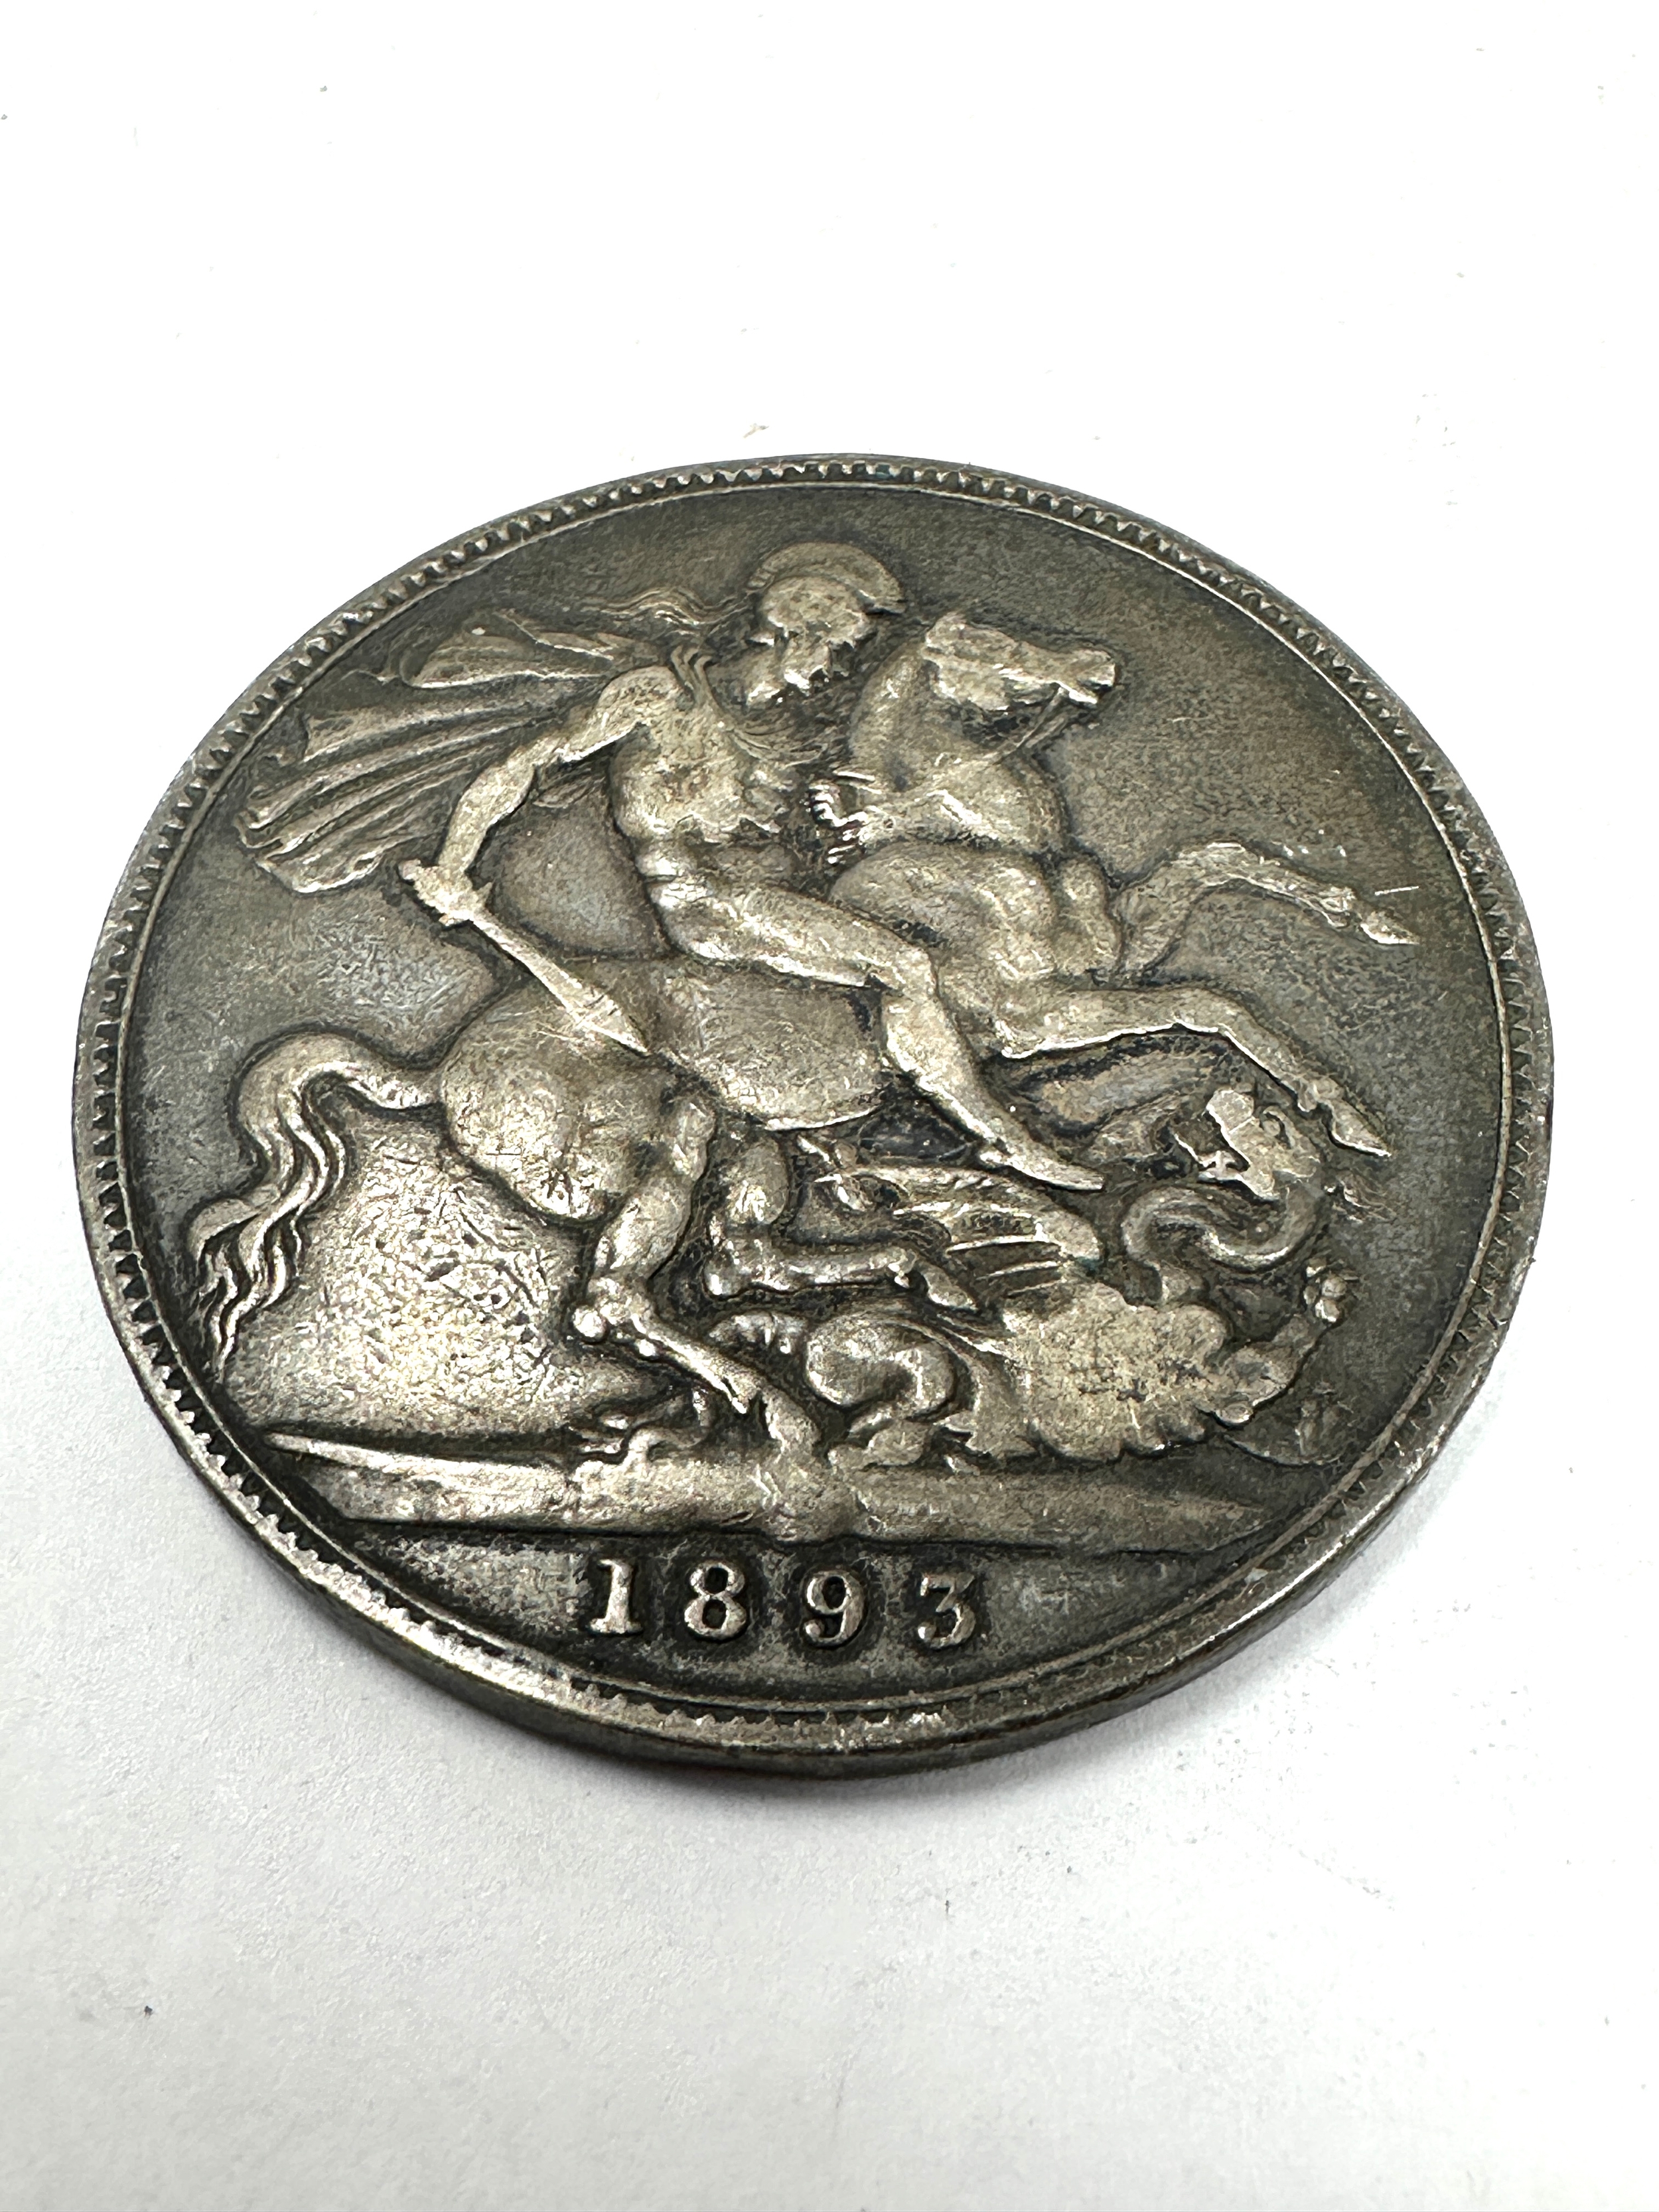 1893 Victorian silver crown